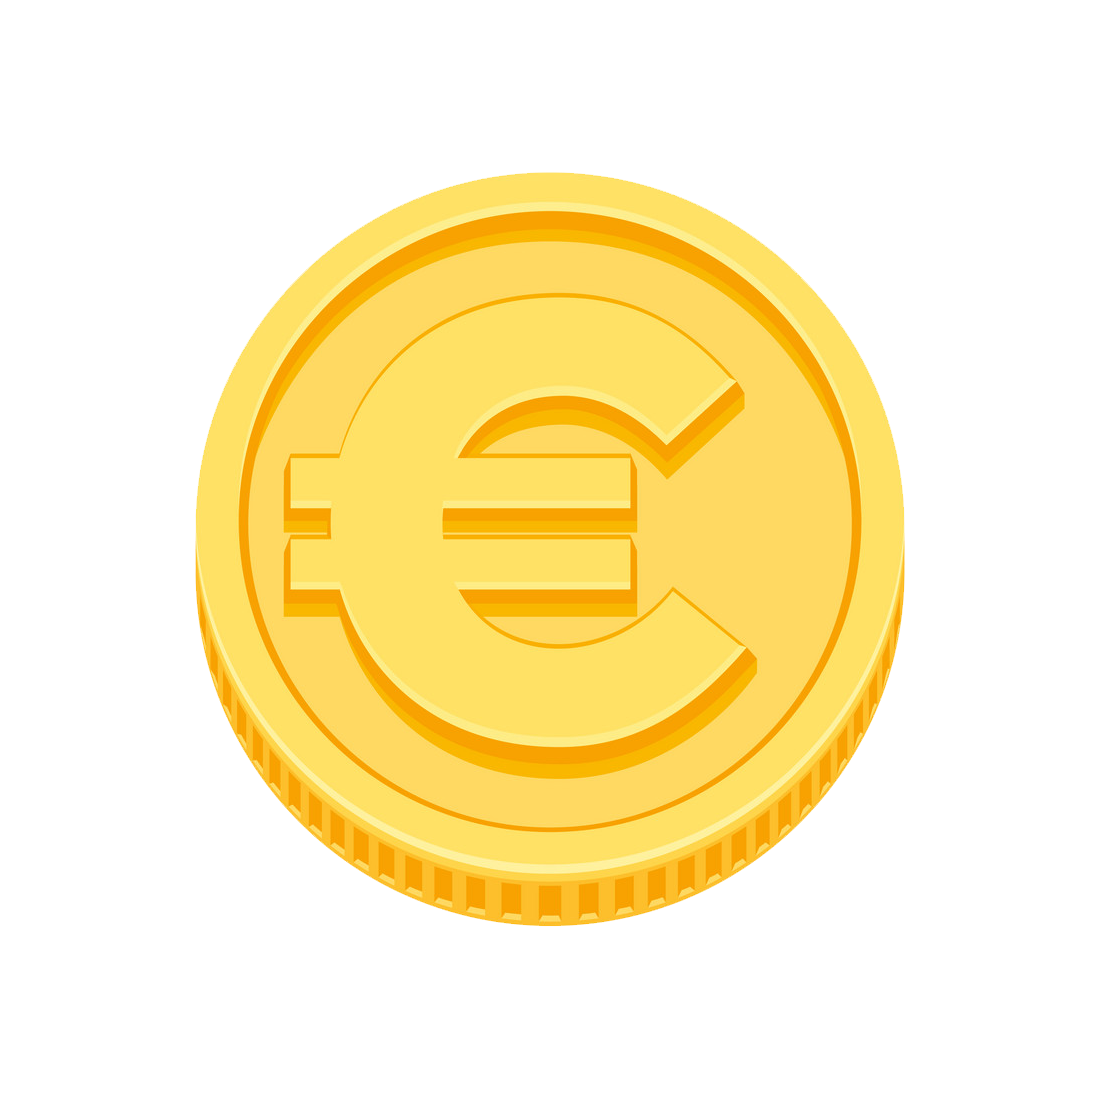 Euro Sign Transparent Photo